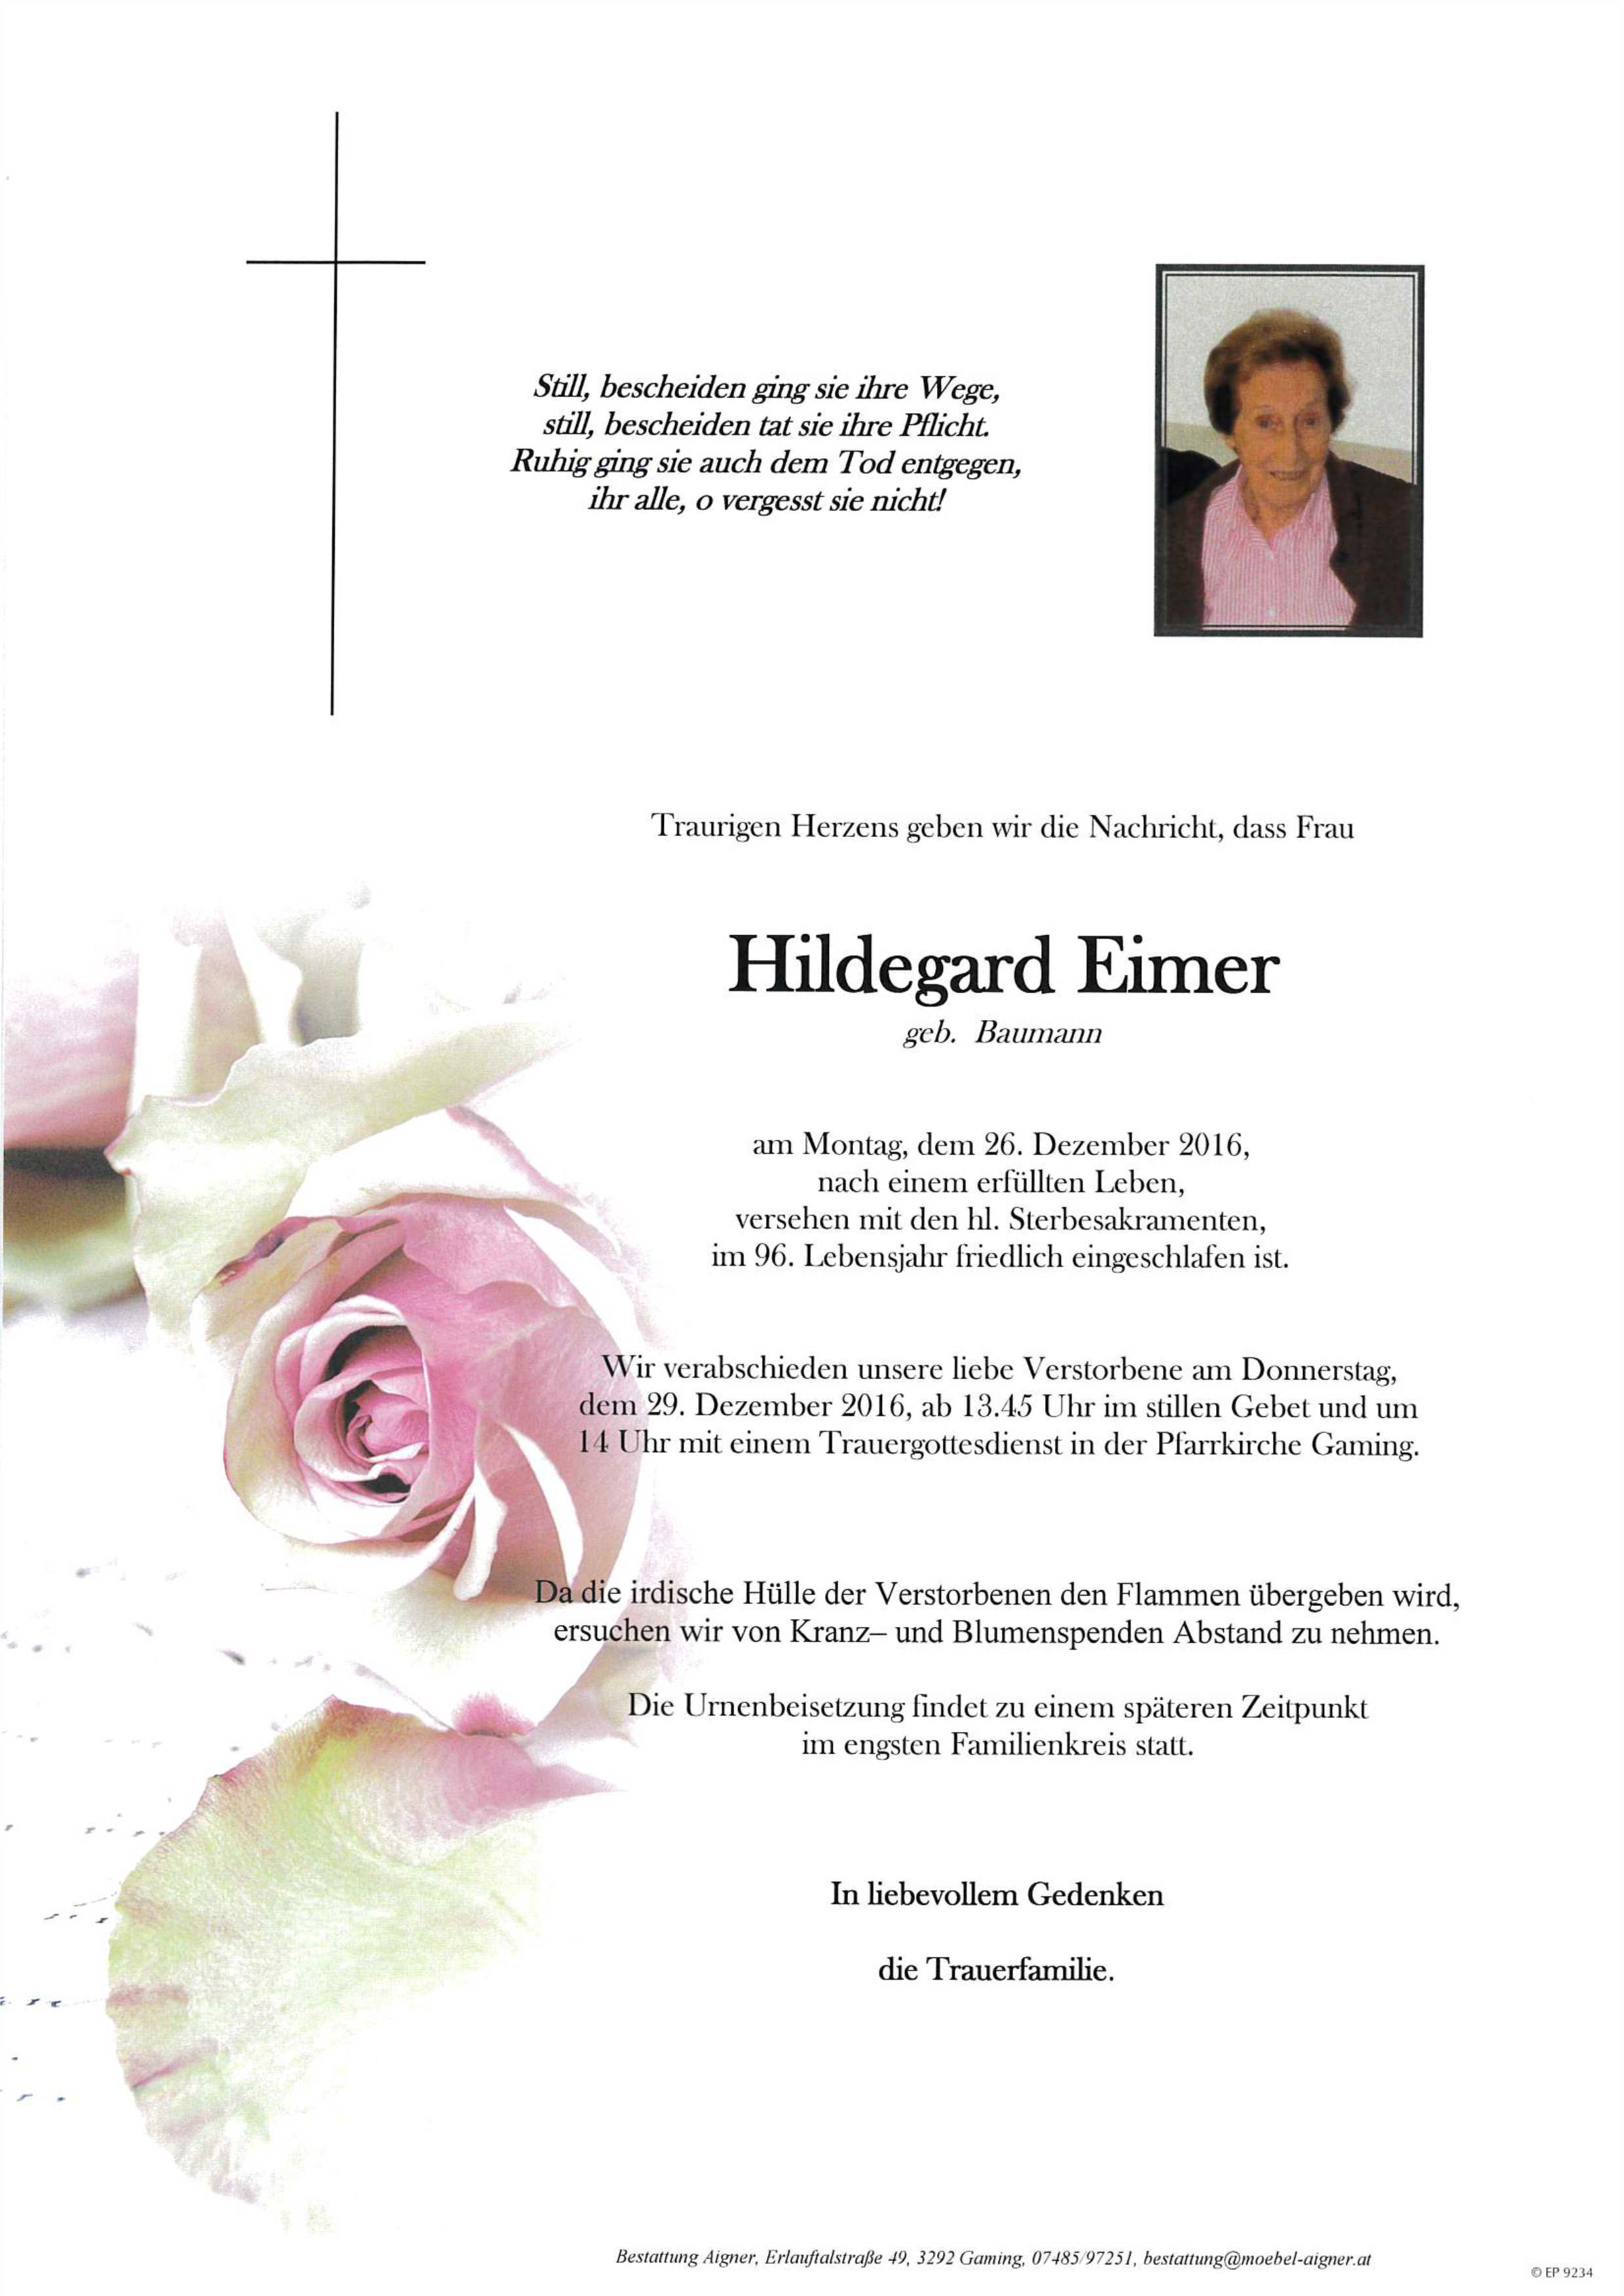 Hildegard Eimer